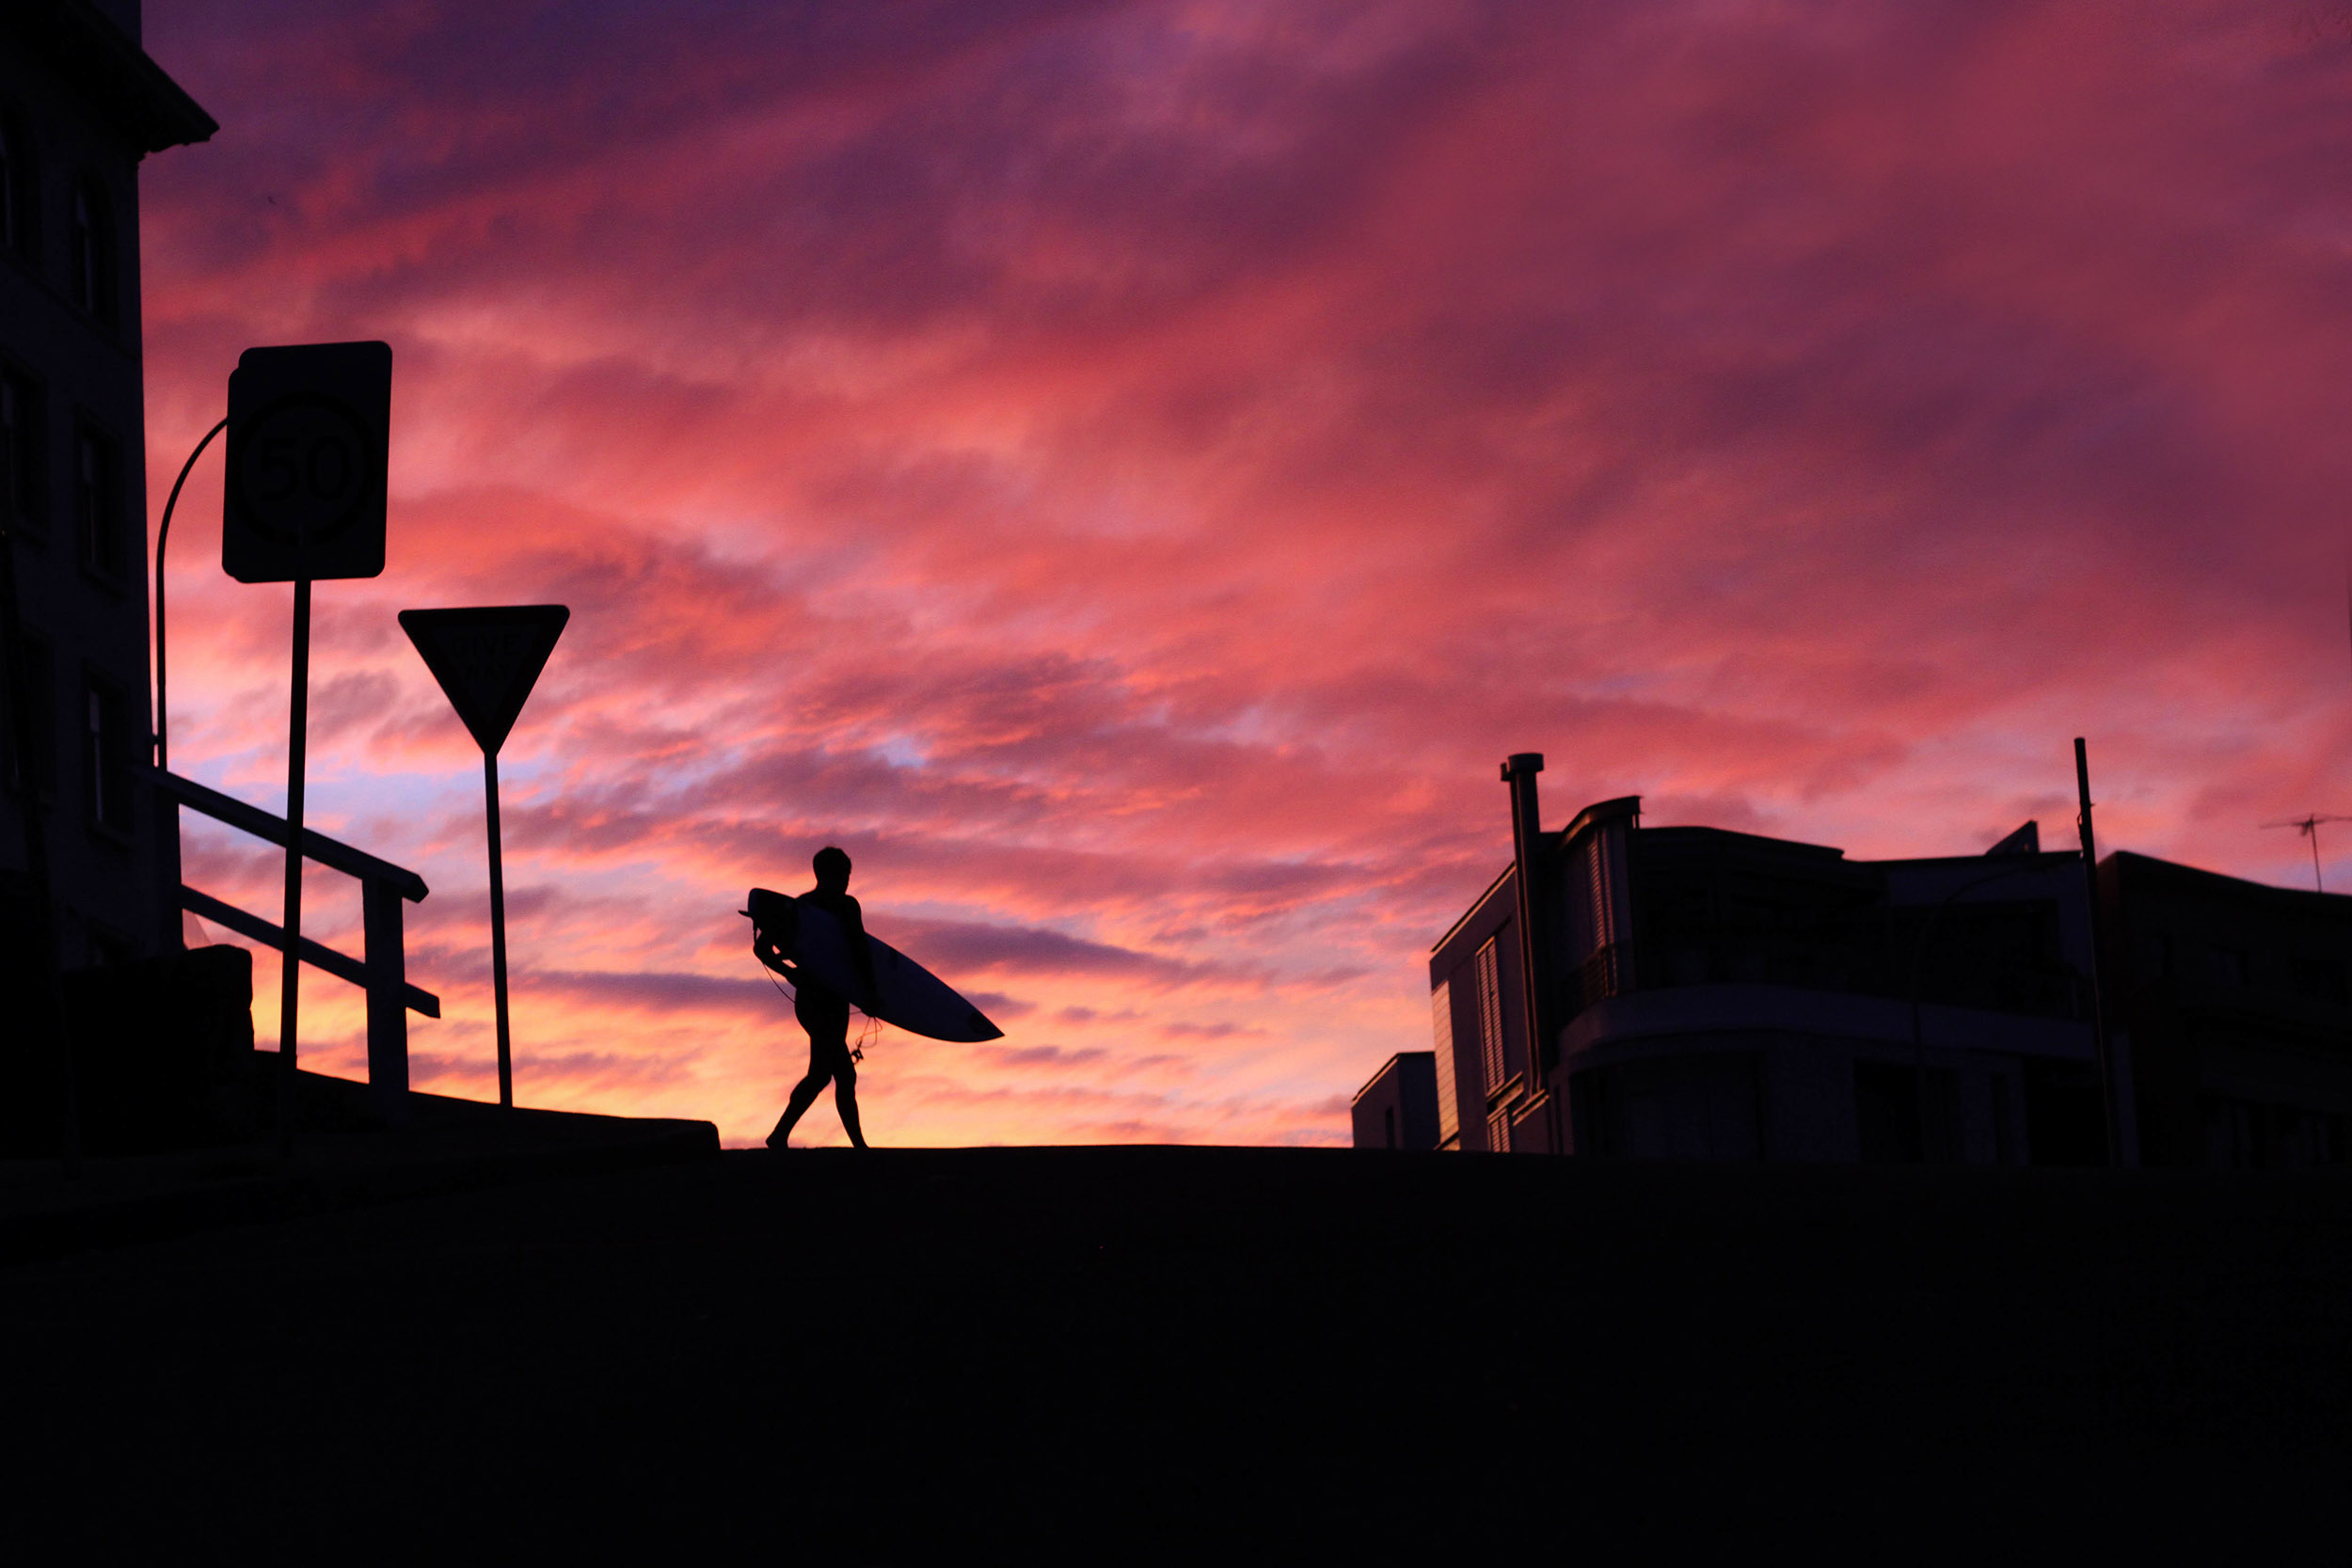 Surfer holding surfboard silhouetted against fiery red sunset sky walking across the pier in Bondi Beach